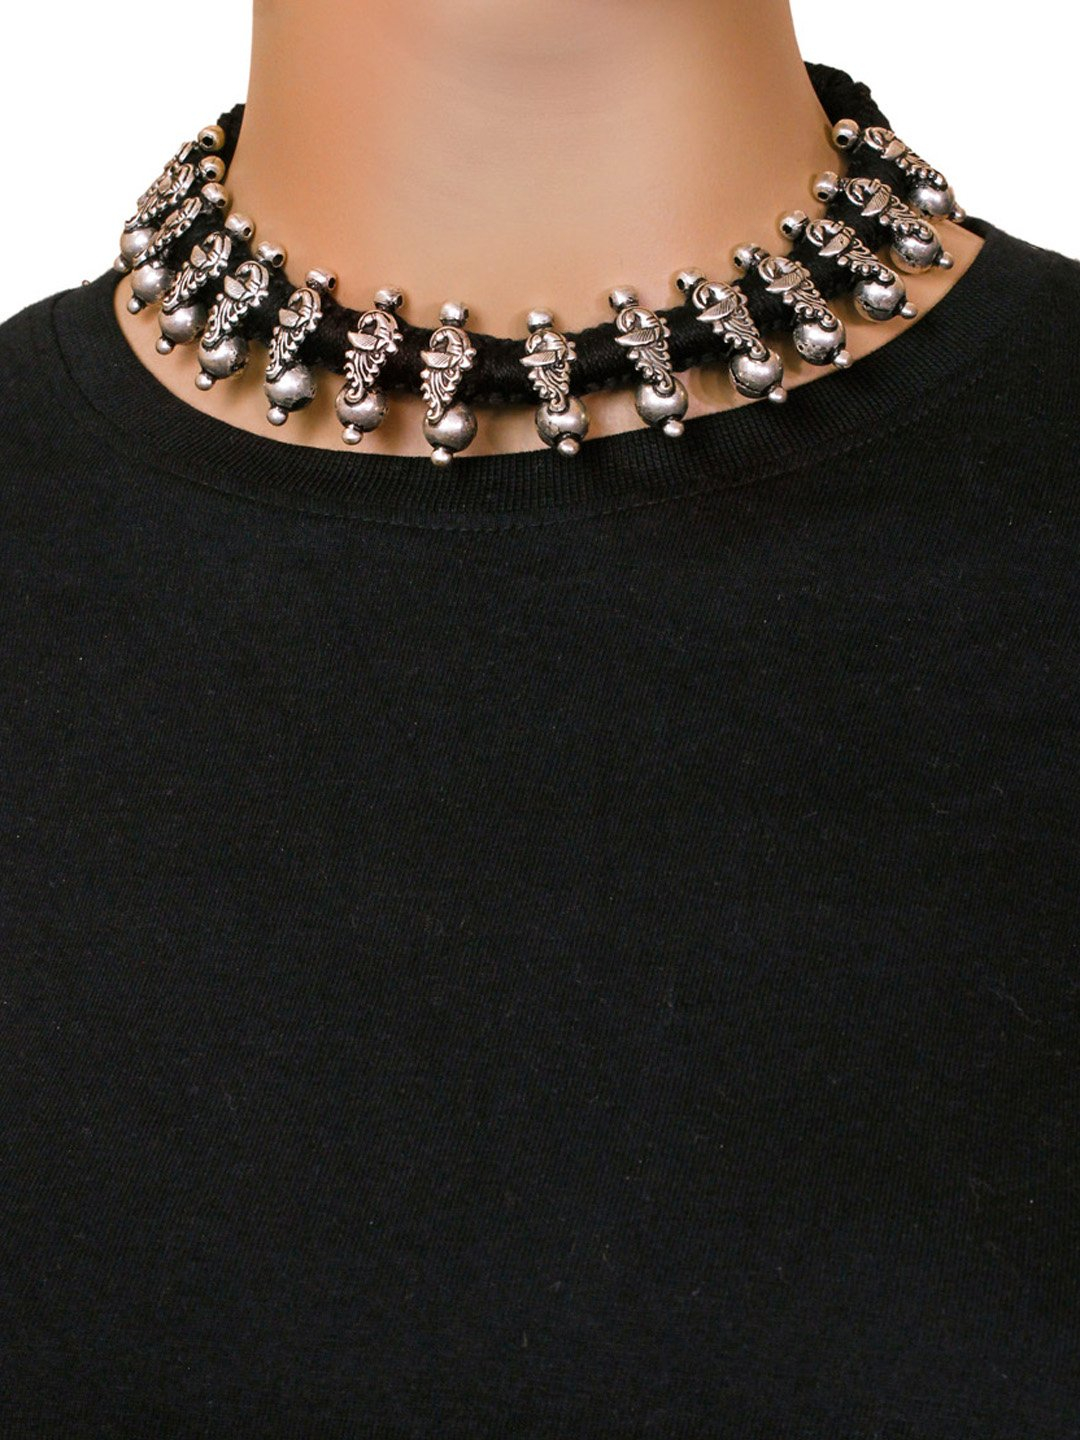 Oxidized German Silver Peacock Design Choker Necklace Set